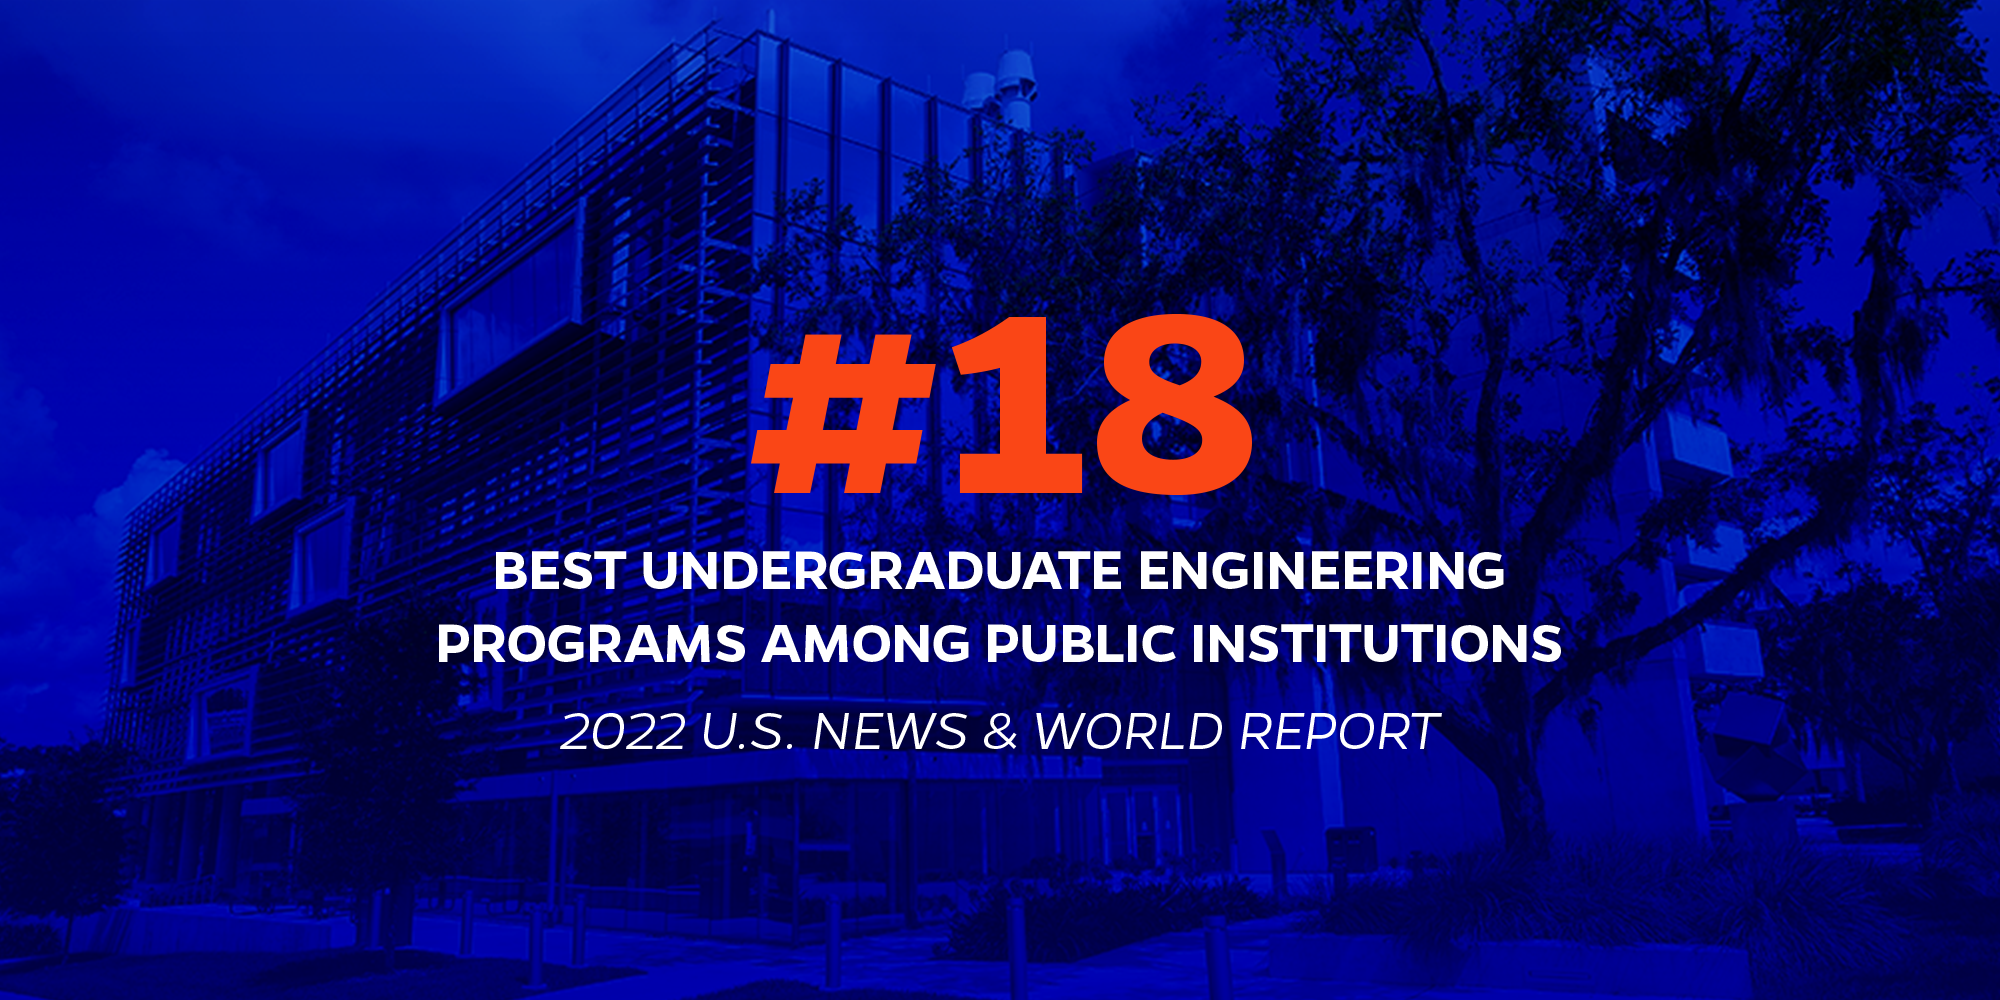 Engineering College Moves Up in Rankings of Best Undergraduate Programs